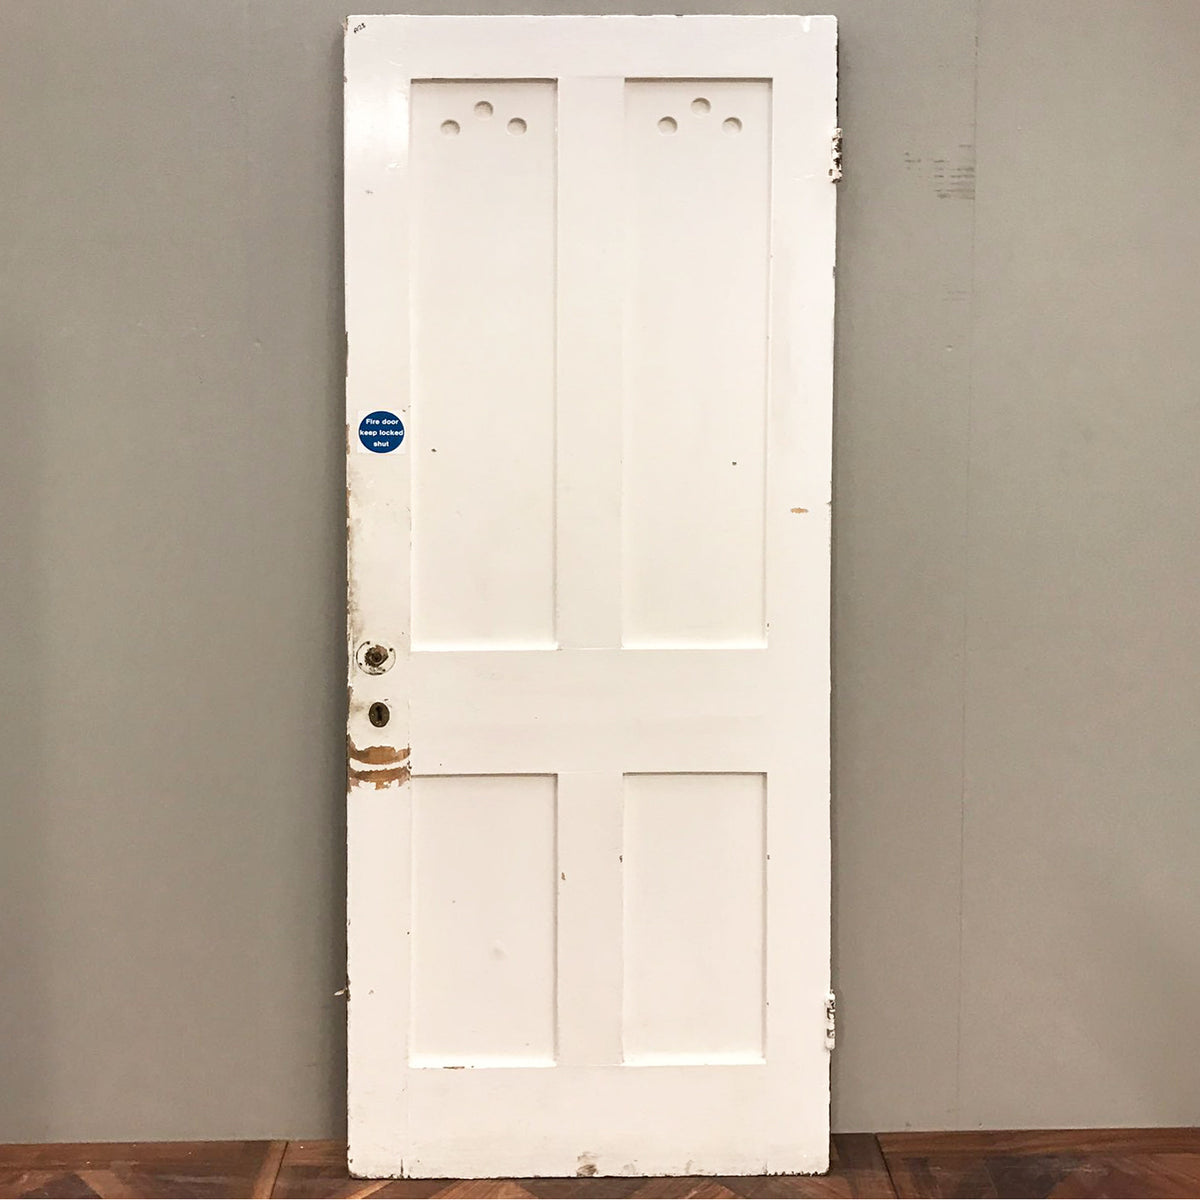 Reclaimed Victorian Four Panel Door - 206cm x 80cm x 4.5cm | The Architectural Forum